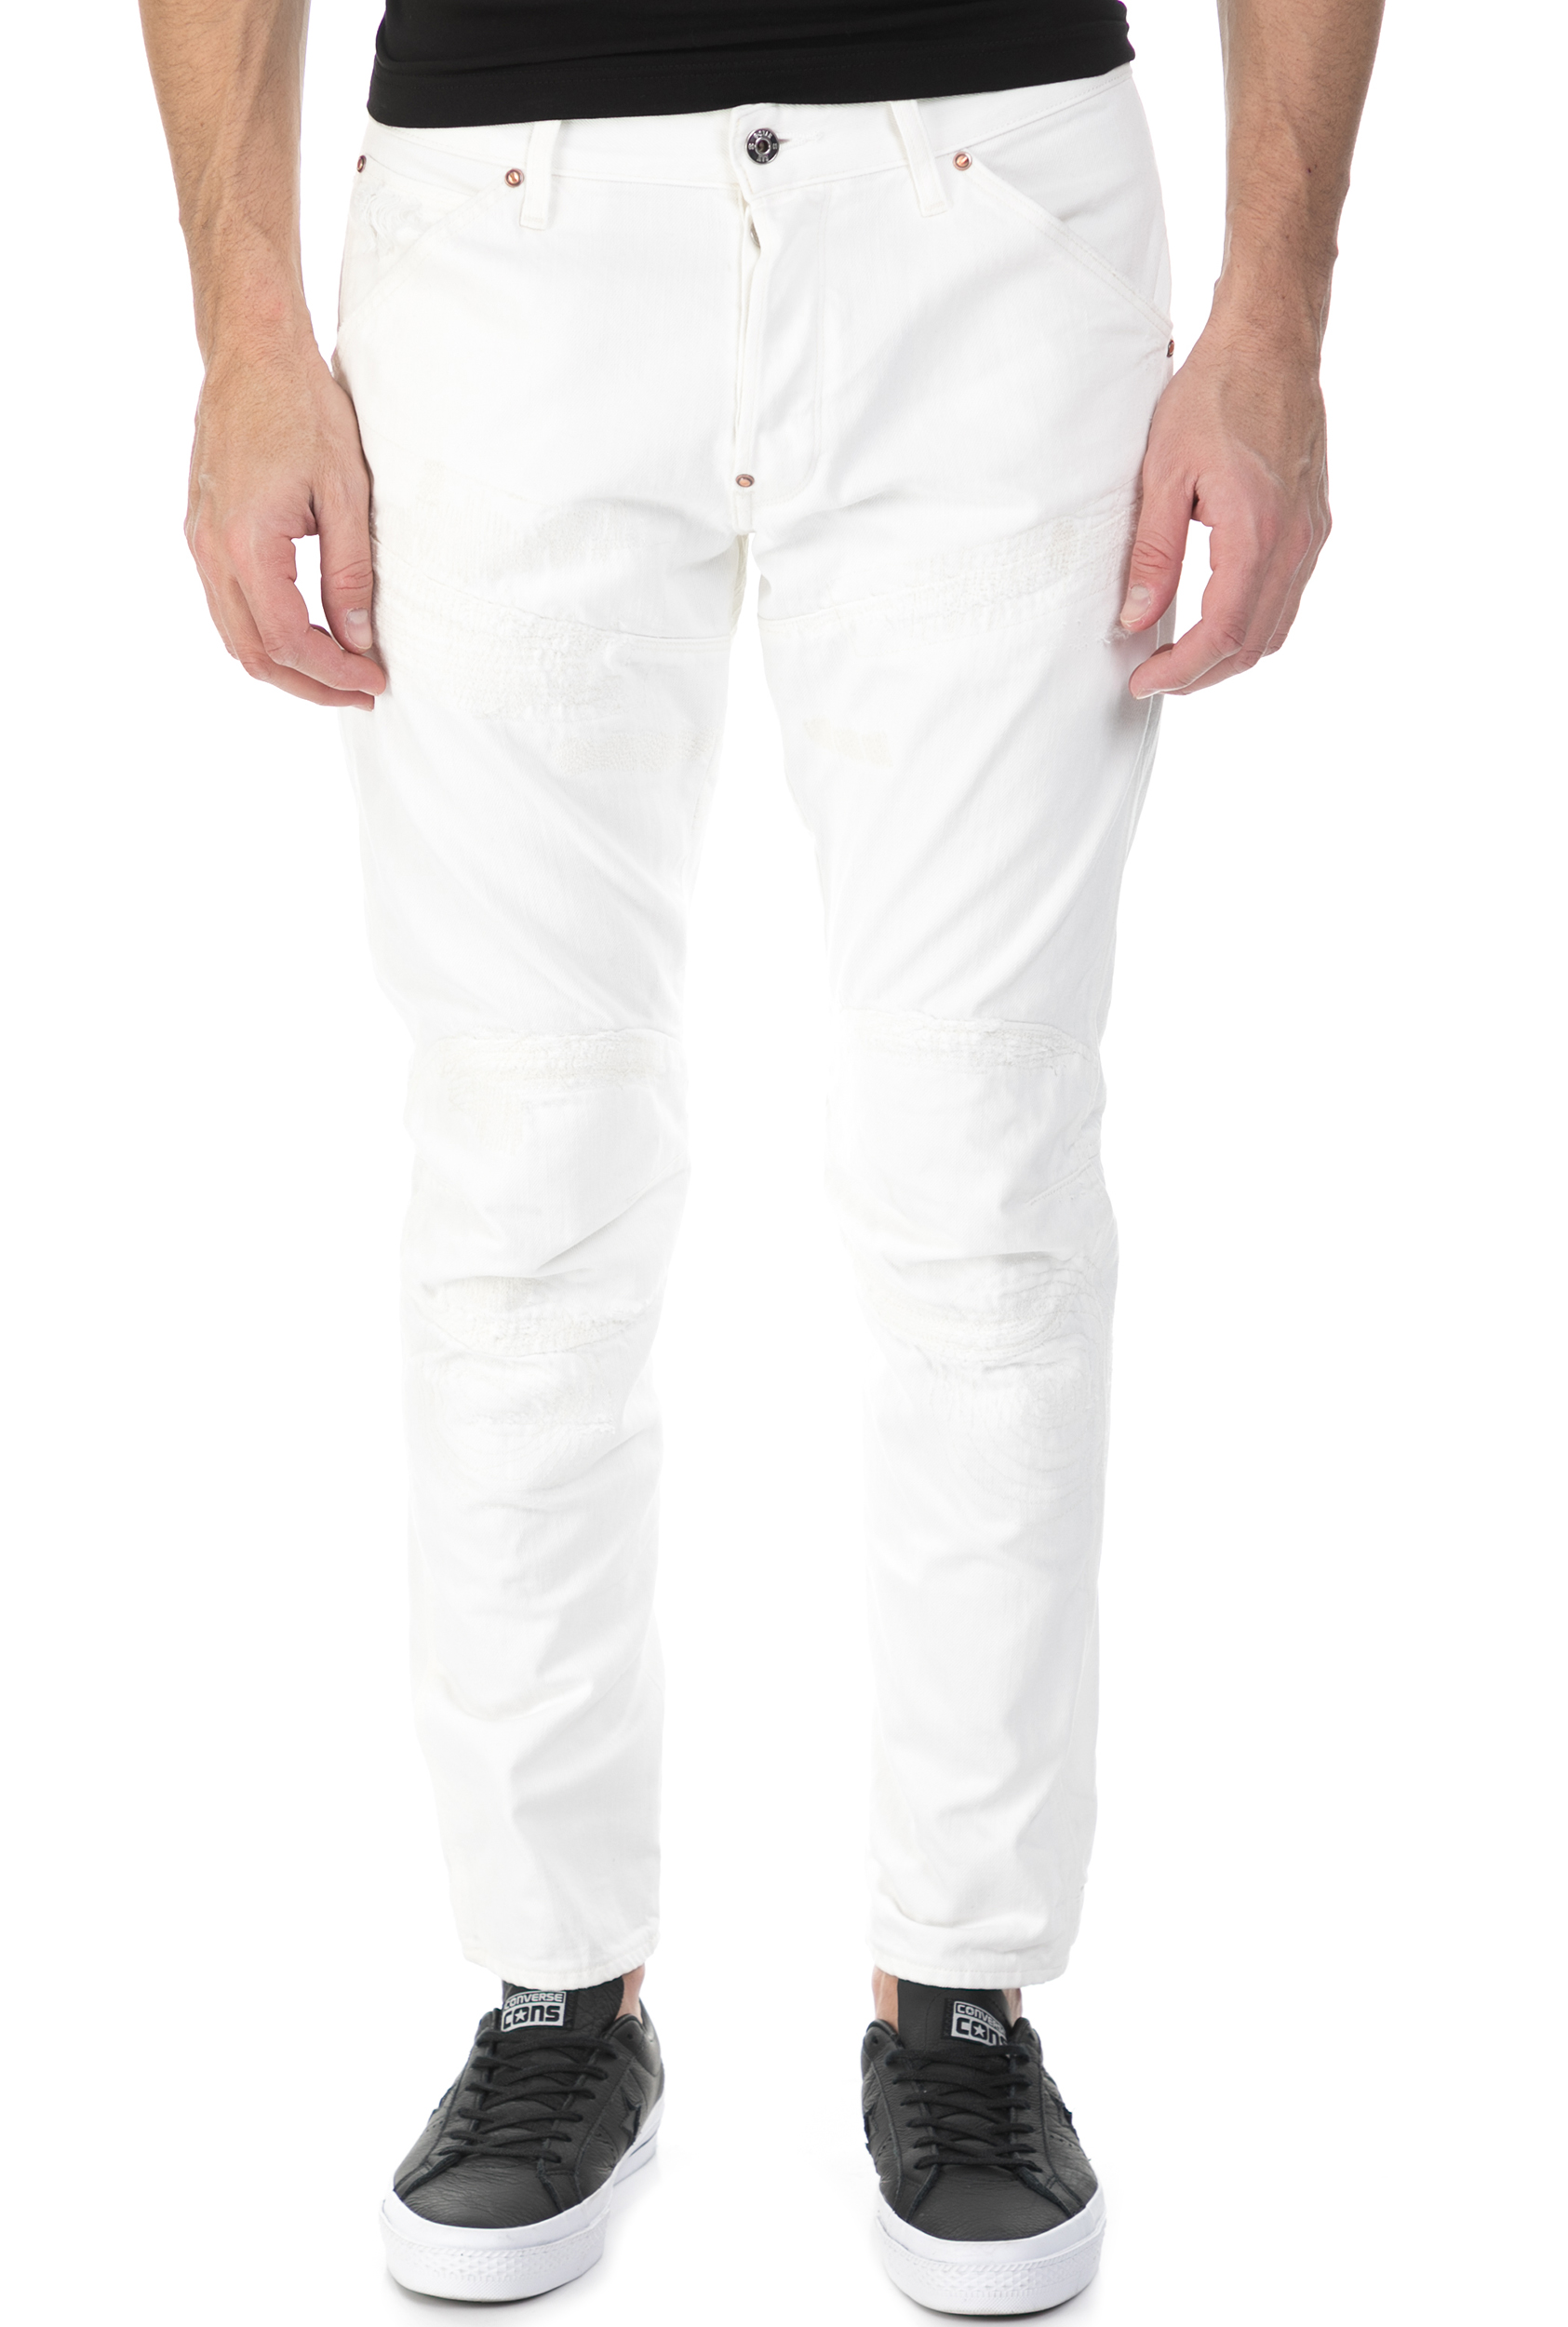 G-STAR RAW - Ανδρικό τζιν παντελόνι G-Star 5620 3D TAPERED λευκό Ανδρικά/Ρούχα/Τζίν/Straight